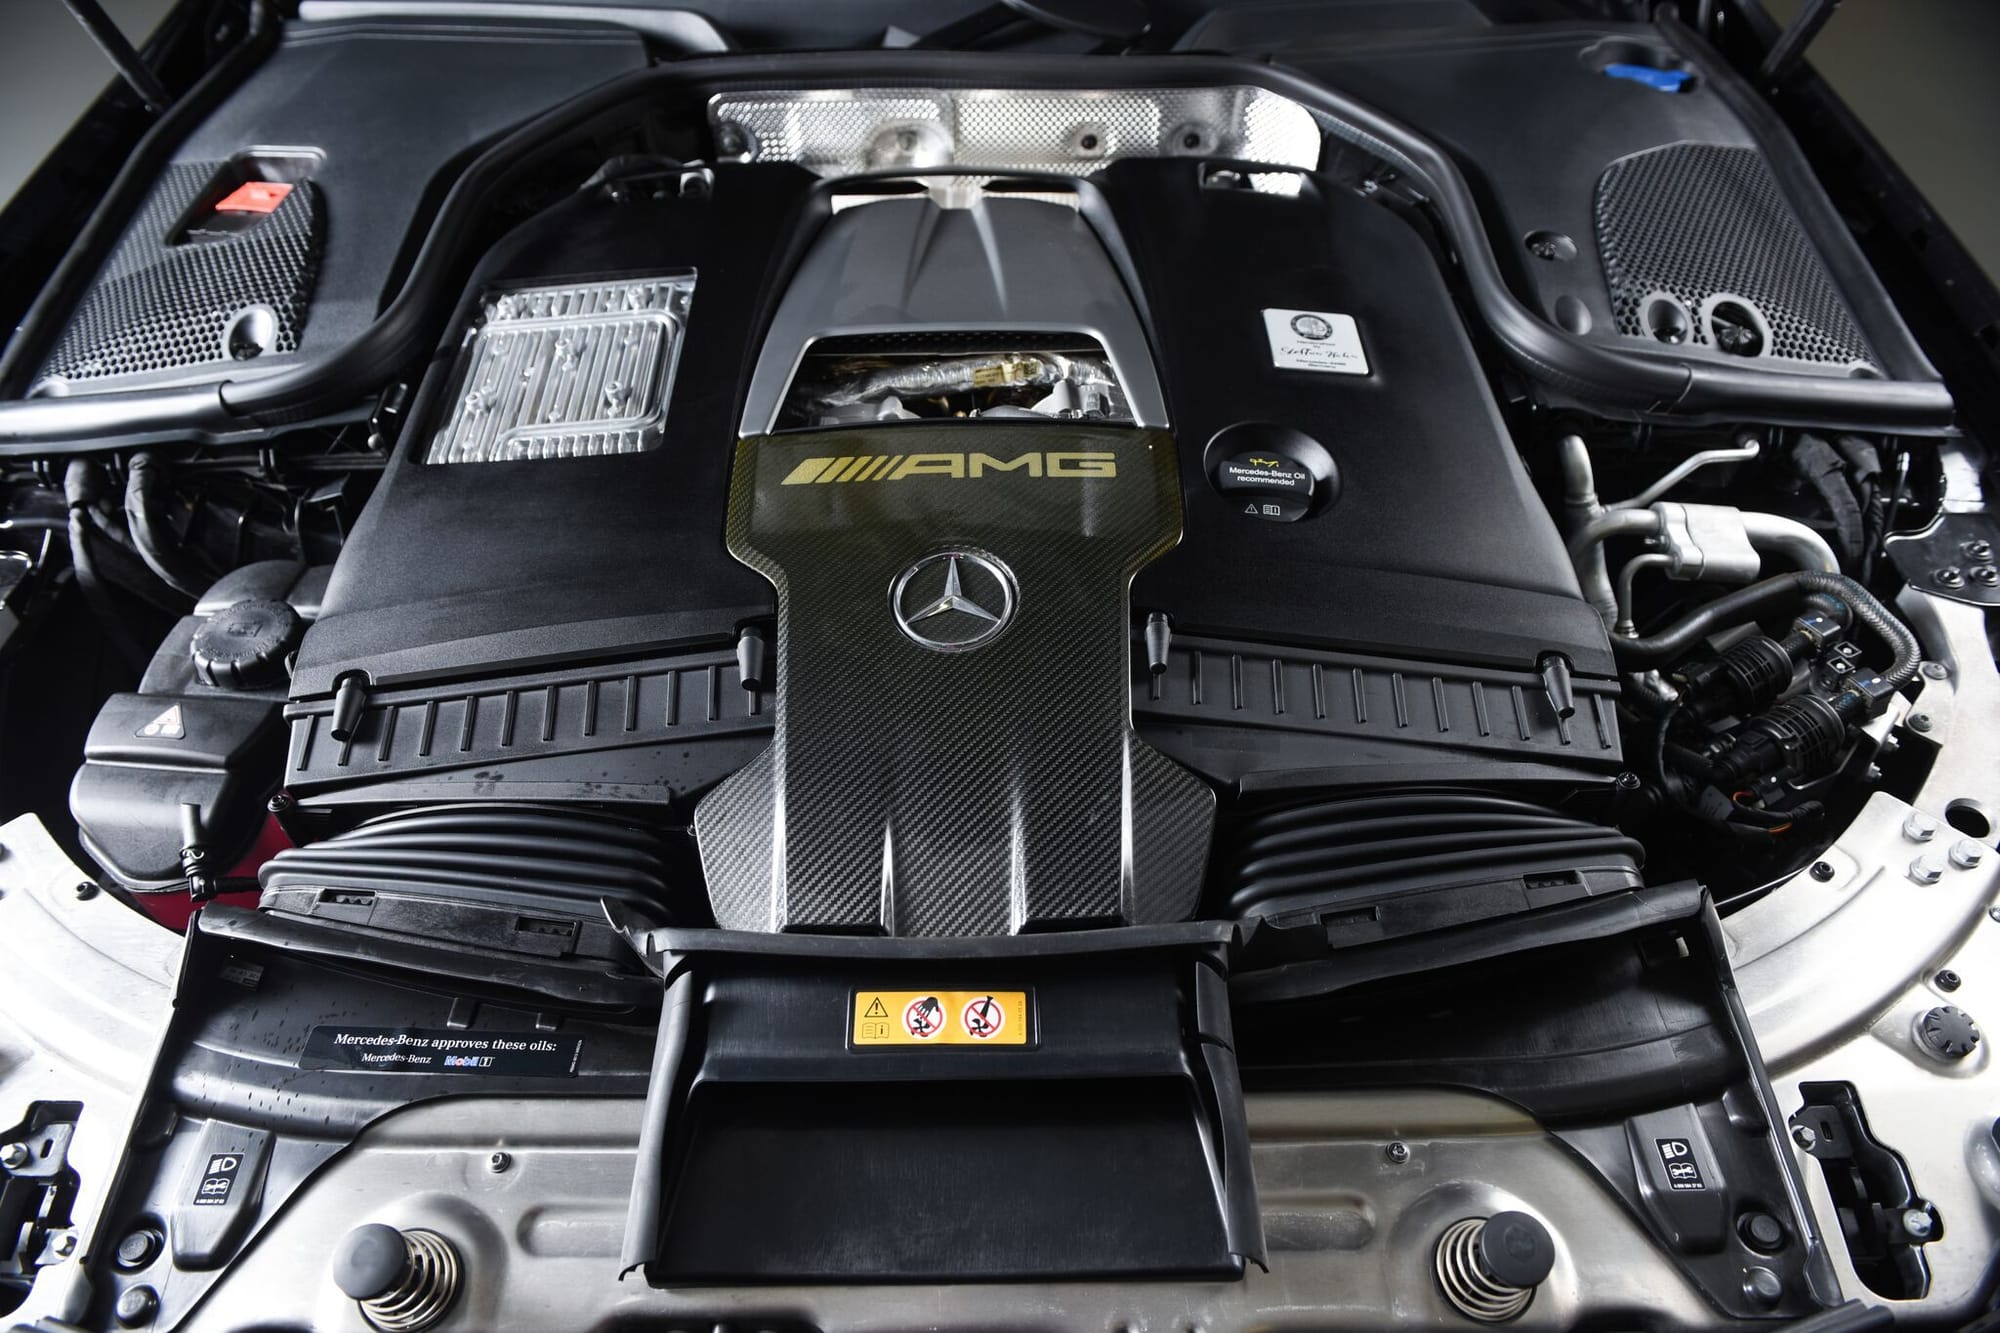 2018 Mercedes-Benz E63 AMG S - 2018 Mercedes Benz E63S AMG Rare Obsidian Black/Black 7,000 Miles $145k MSRP CPO!!! - Used - VIN WDDZF8KB4JA419263 - 7,000 Miles - 8 cyl - Ny, NY 10010, United States